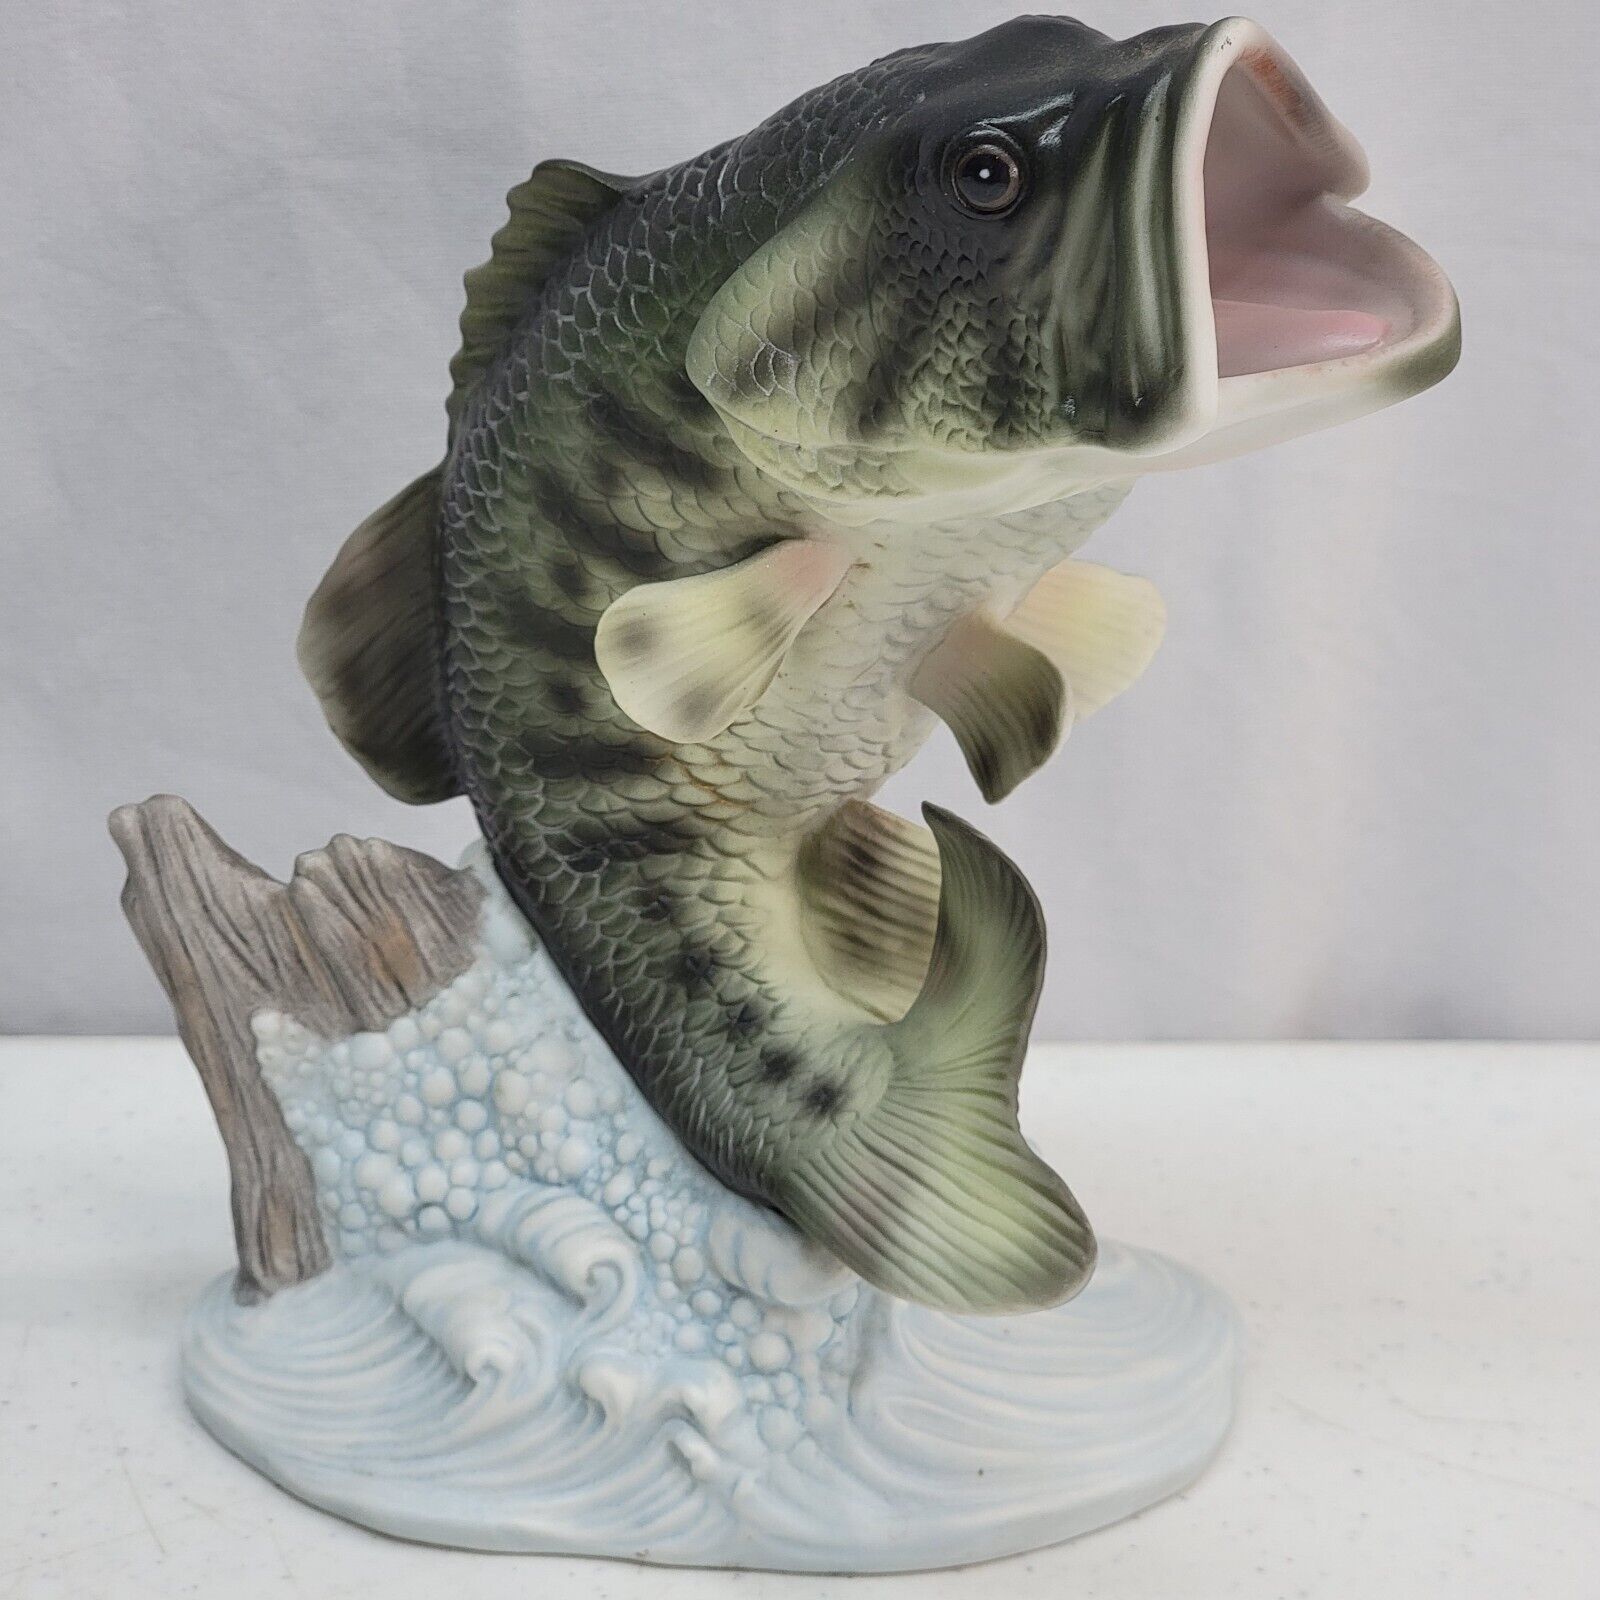 VTG Homco Masterpiece Porcelain 1988 Large Mouth Bass Fish Live Action Figurine